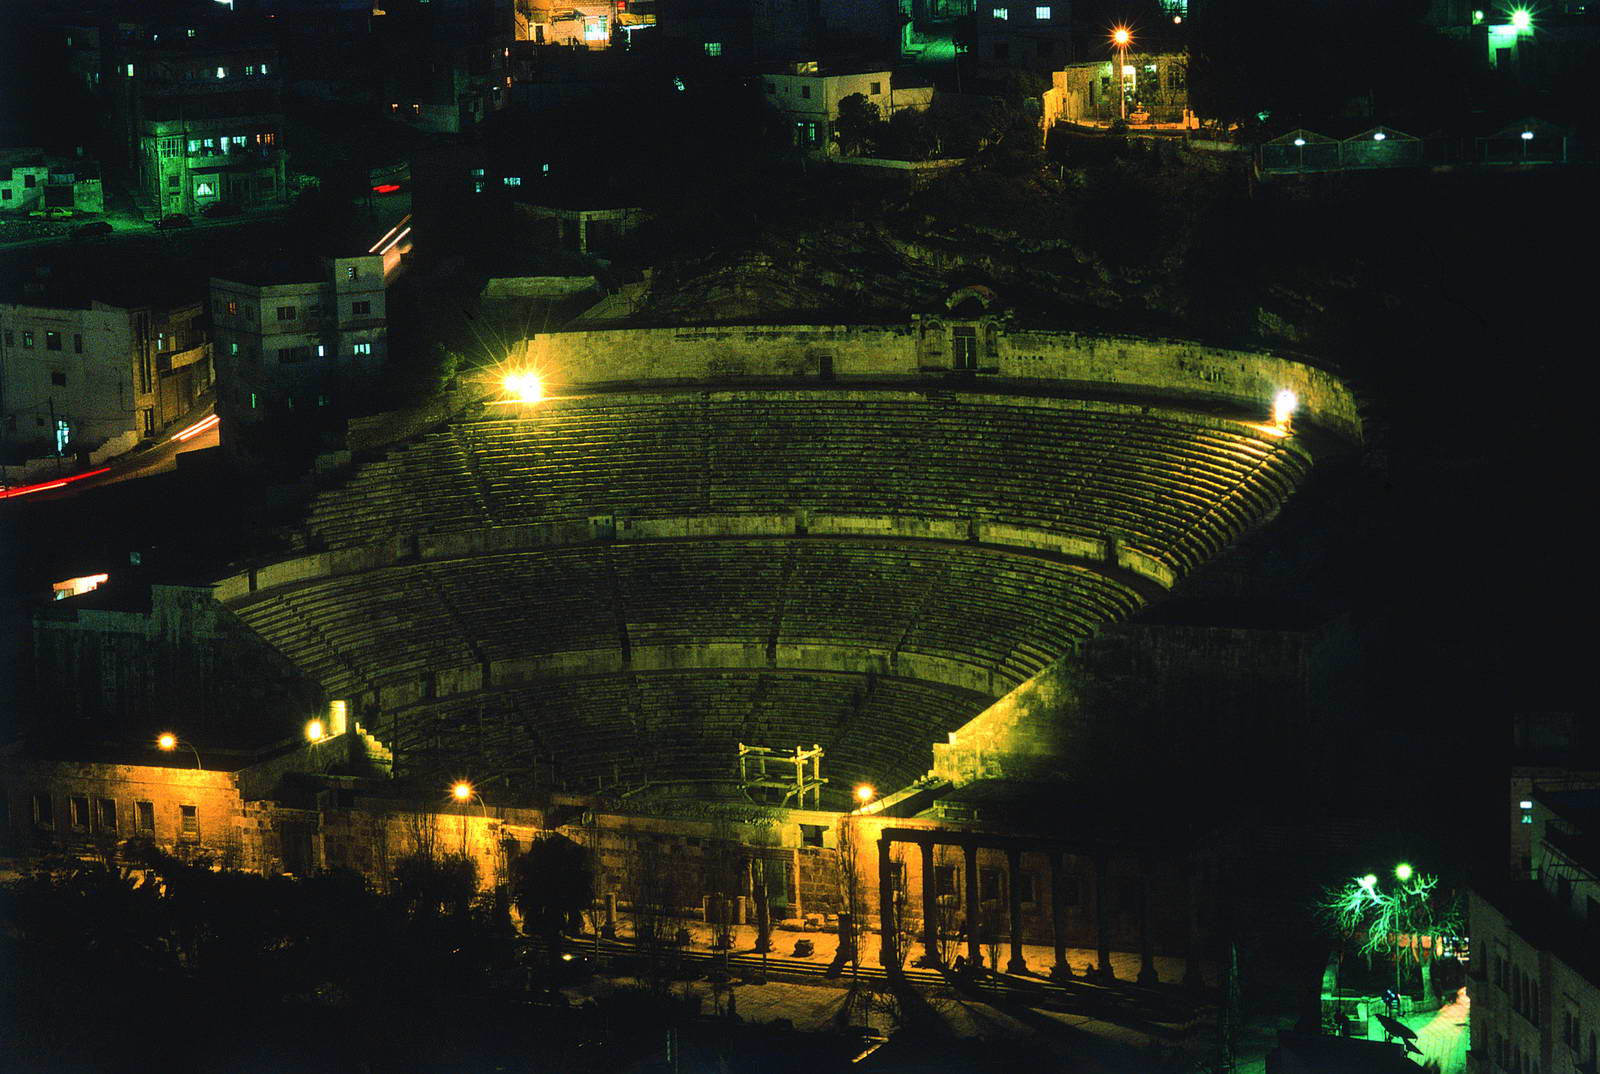 Amman tour Roman Theatre